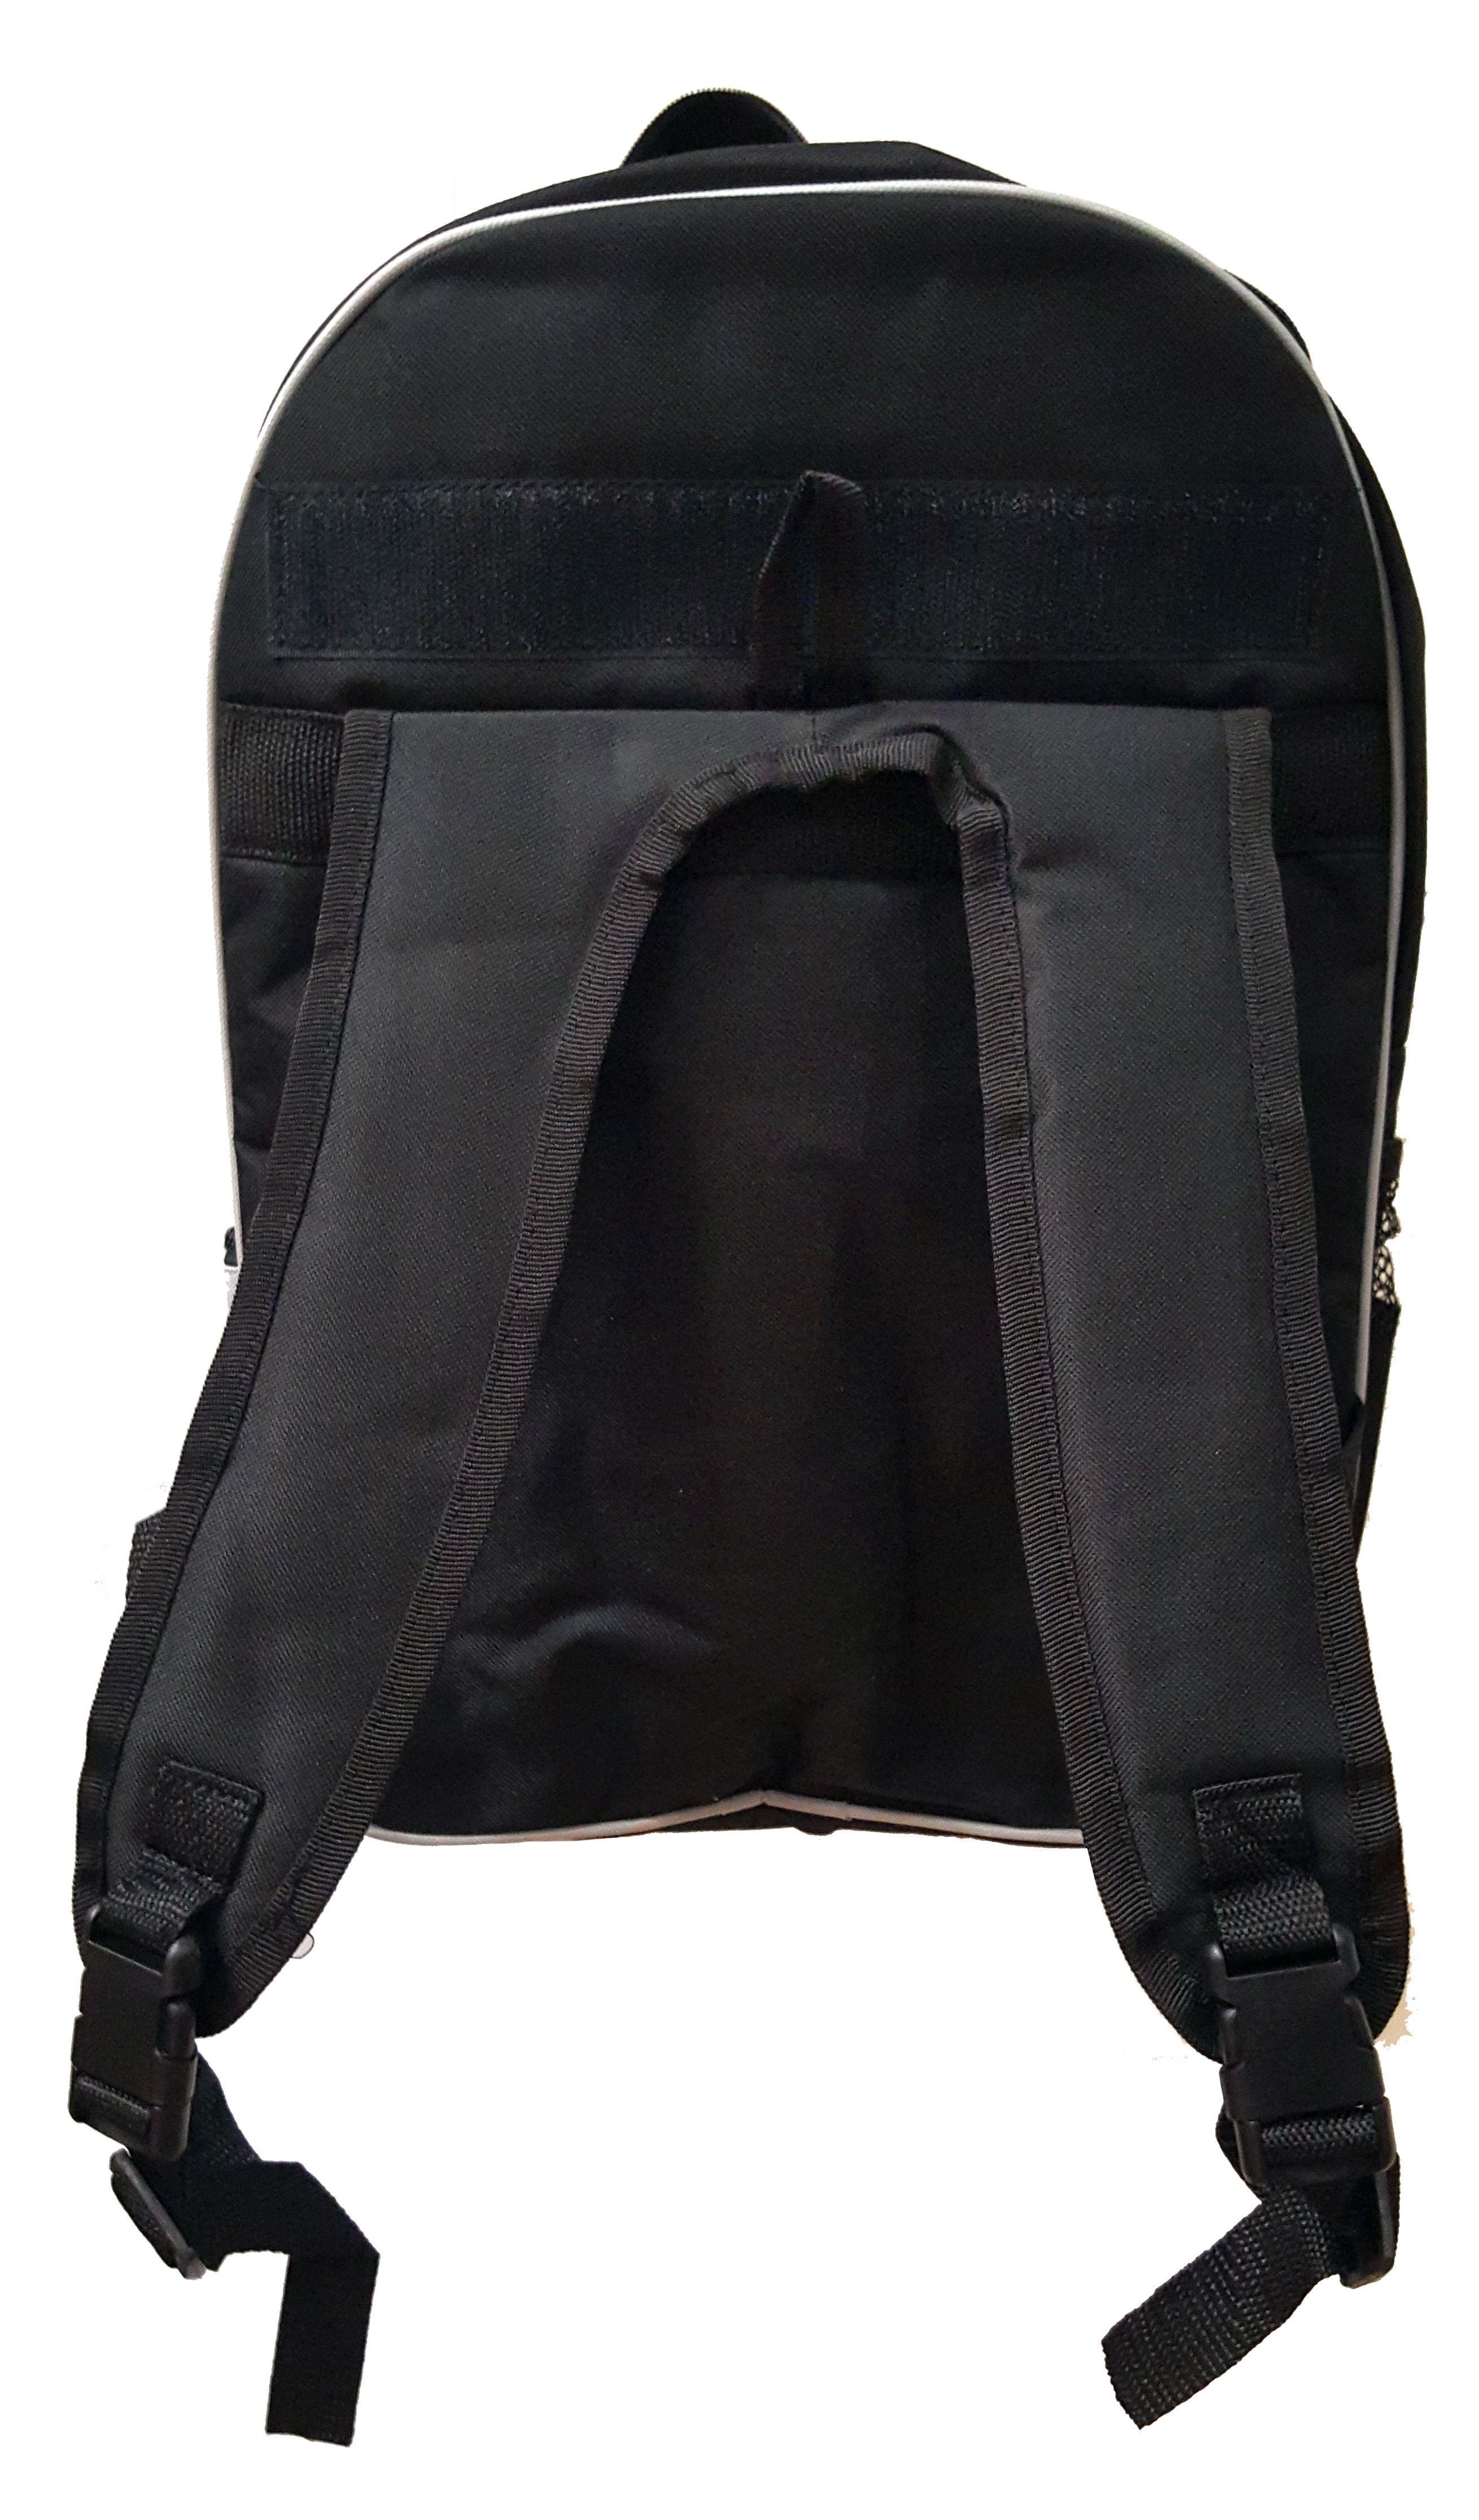 Hipster Galactic Kitten in Glasses - Girls Black School Backpack & Pencil Bag Set - image 5 of 5